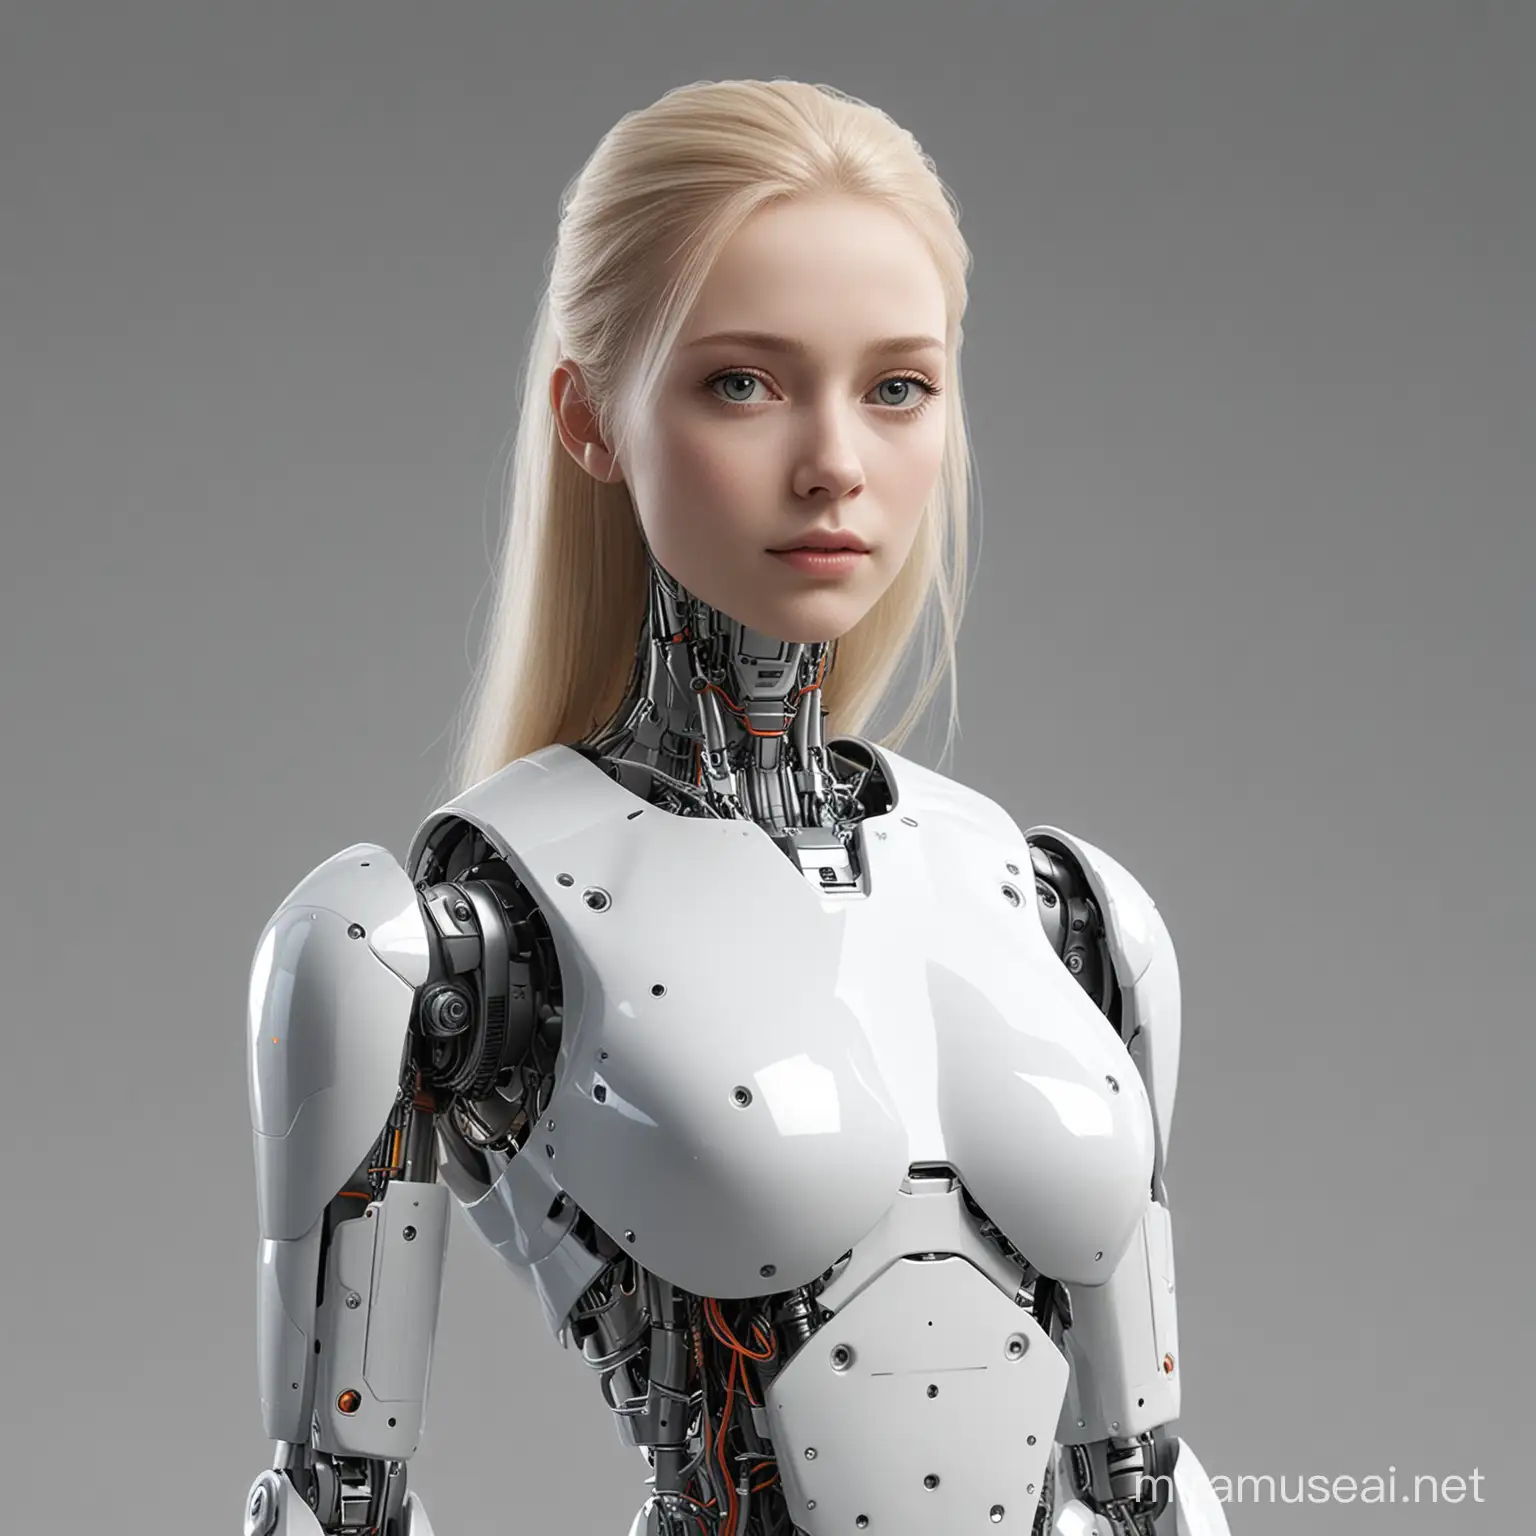 Futuristic Cyborg IA Robot with Human Features